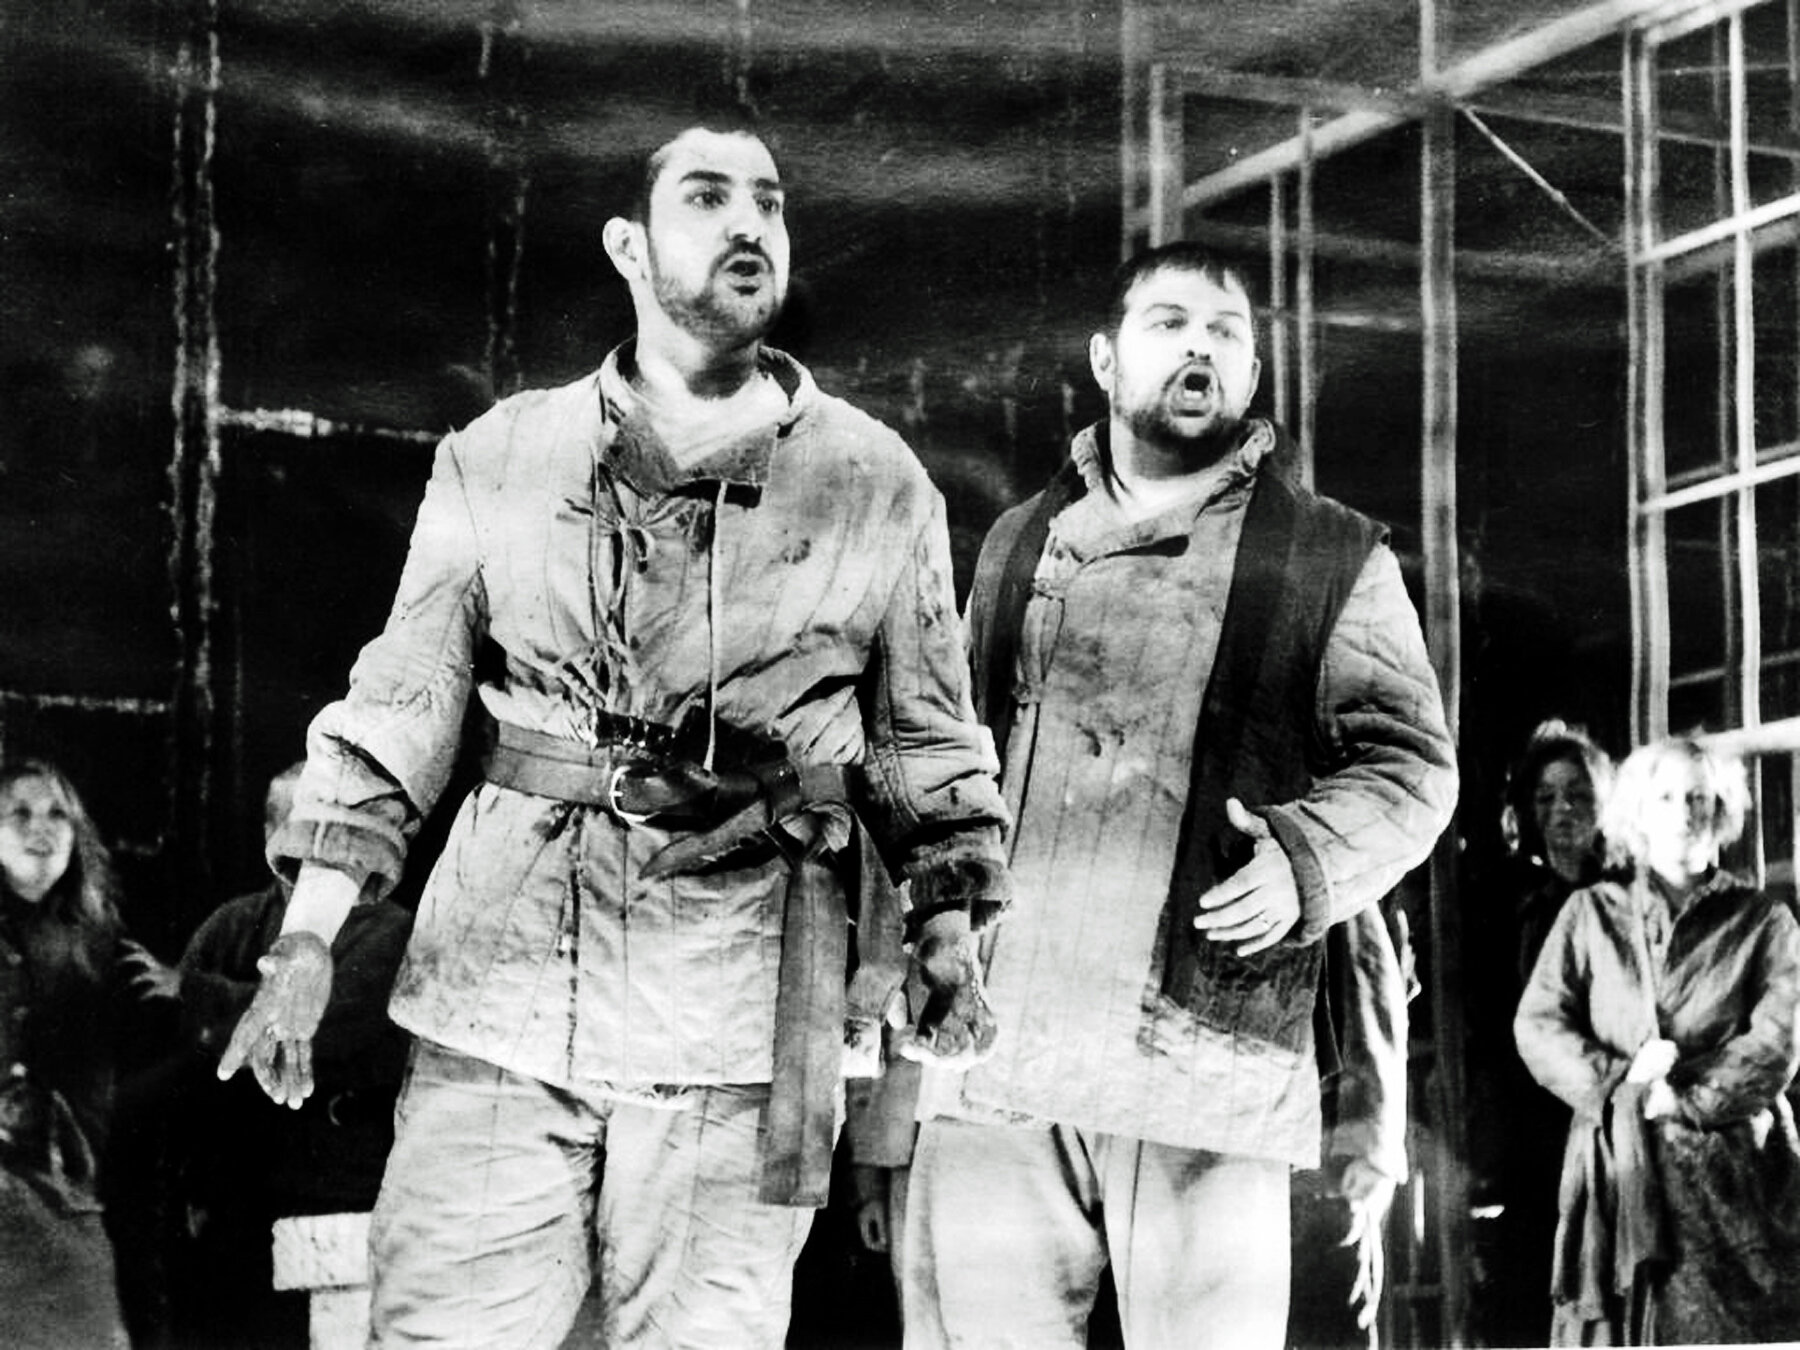  As Malcom in Verdi’s Macbeth, with Leonardo Capalbo as Macduff 